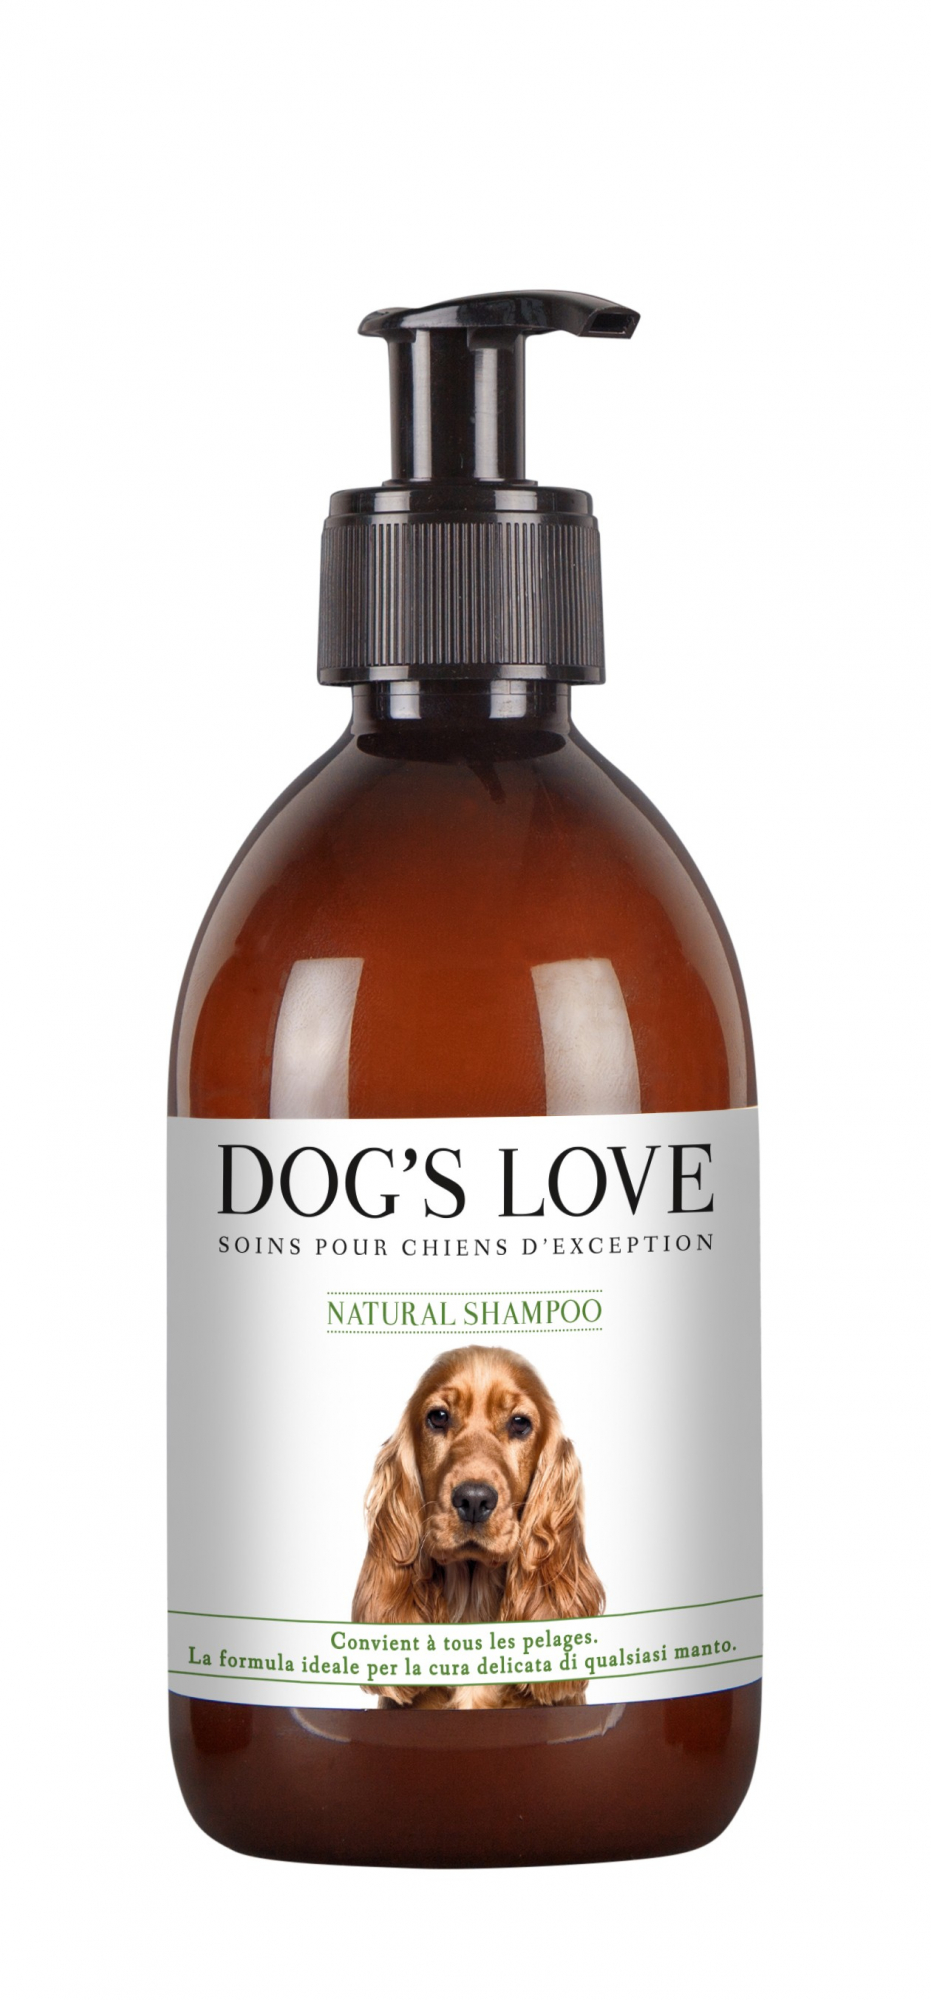 Champú Dog's Love Natural Shampoo para perro